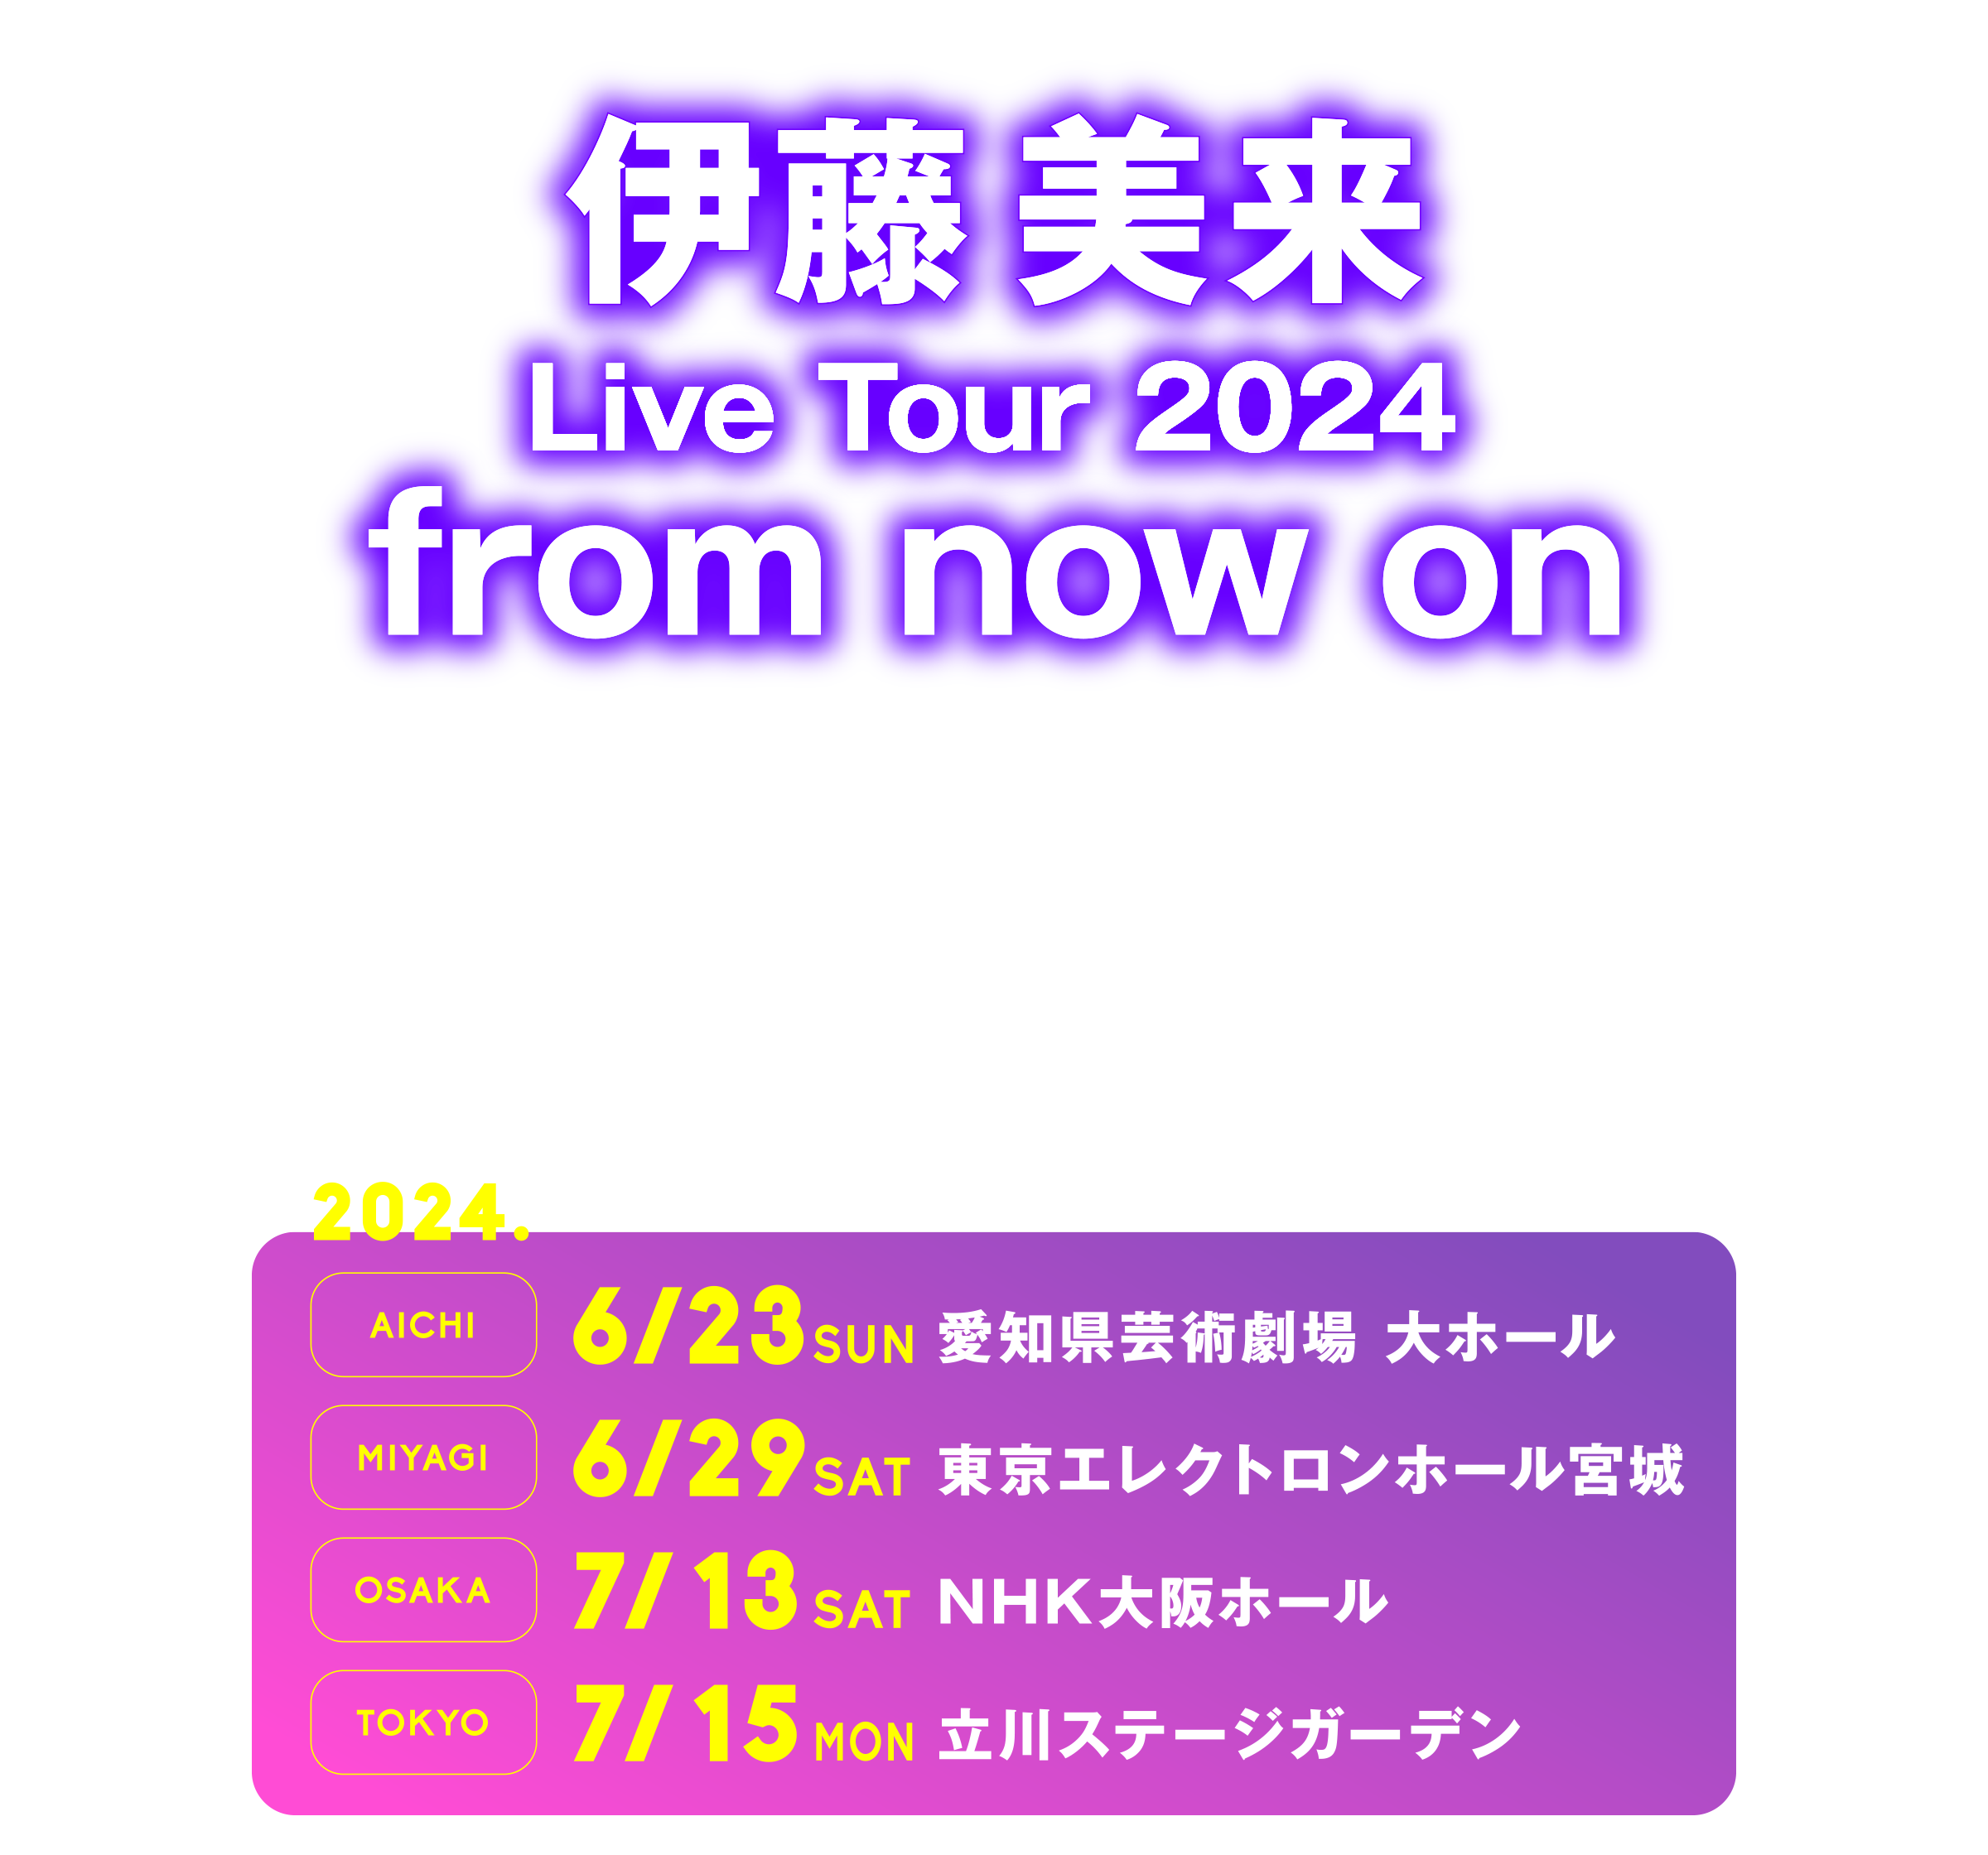 伊藤美来 Live Tour 2023